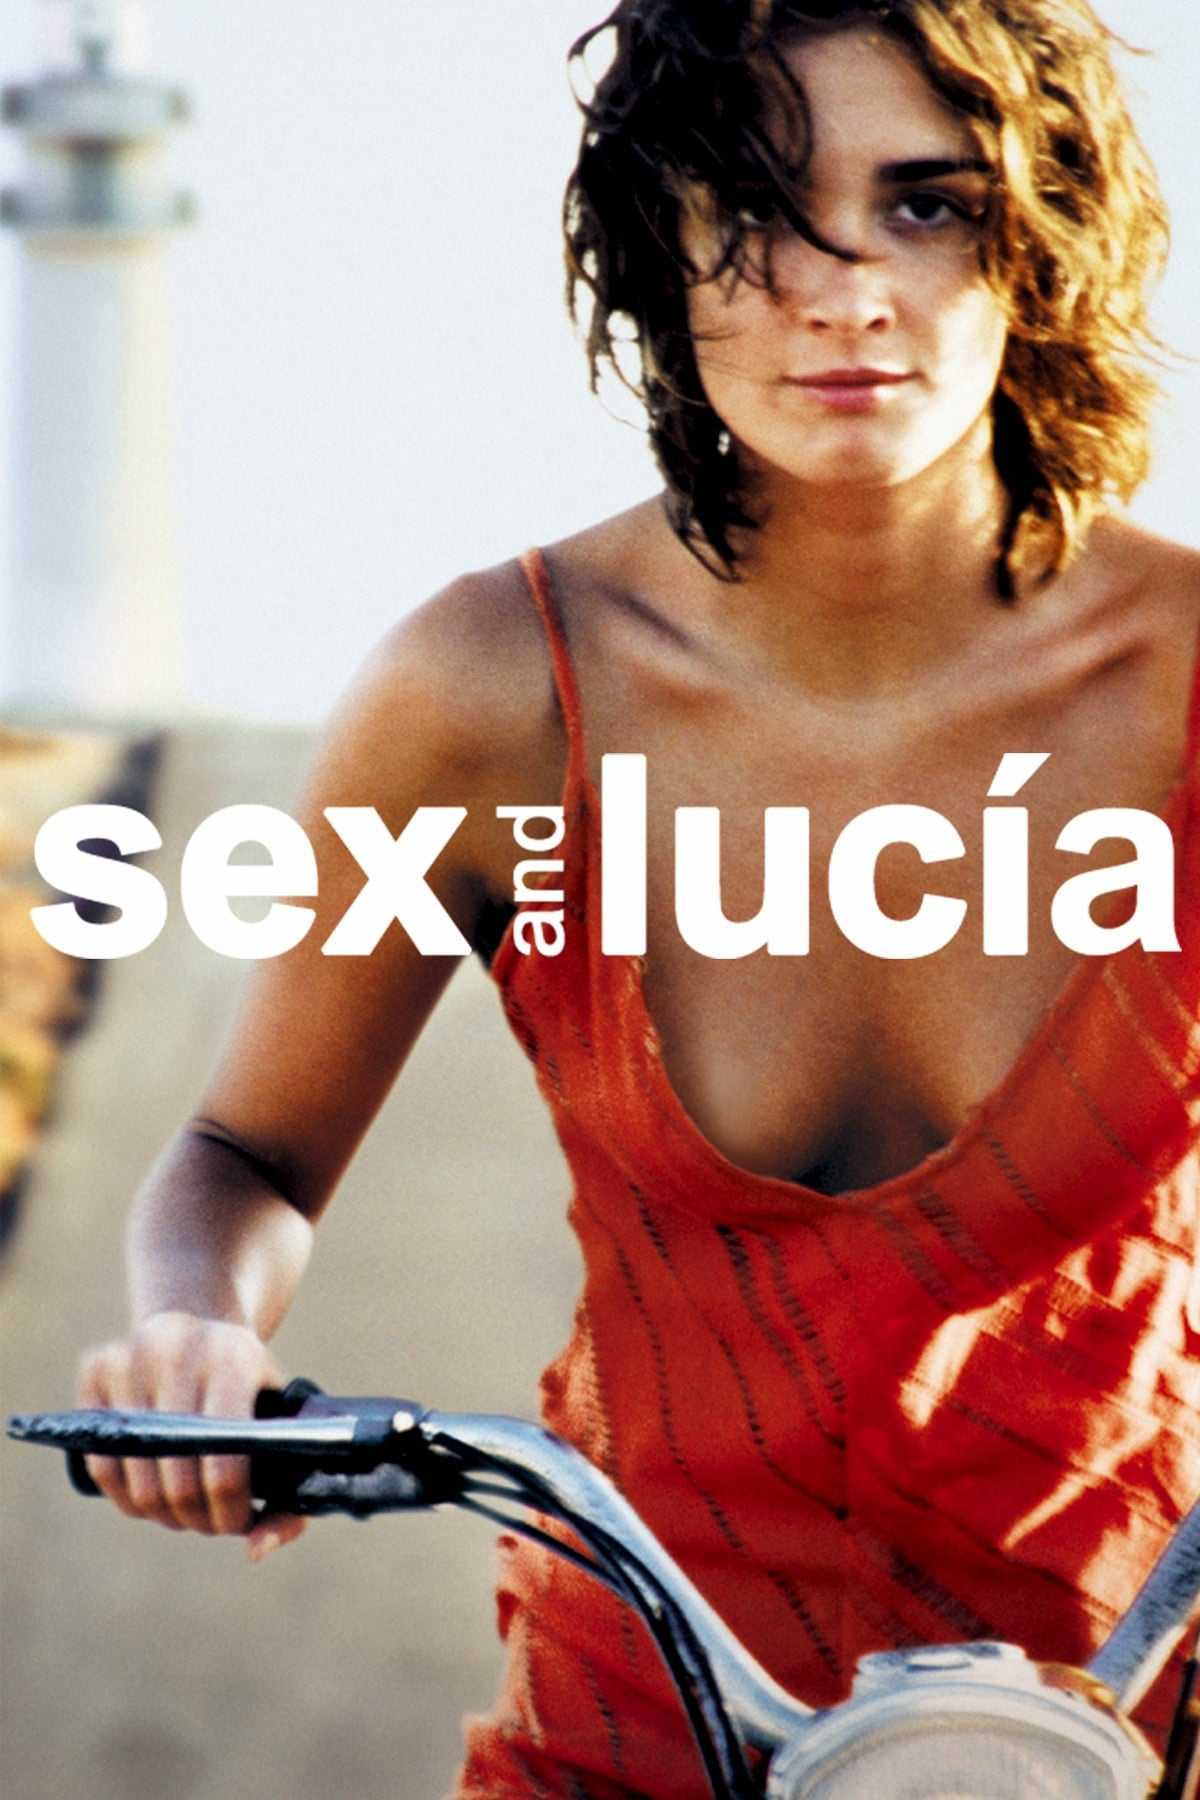 Sex and lucía - Sex and lucía